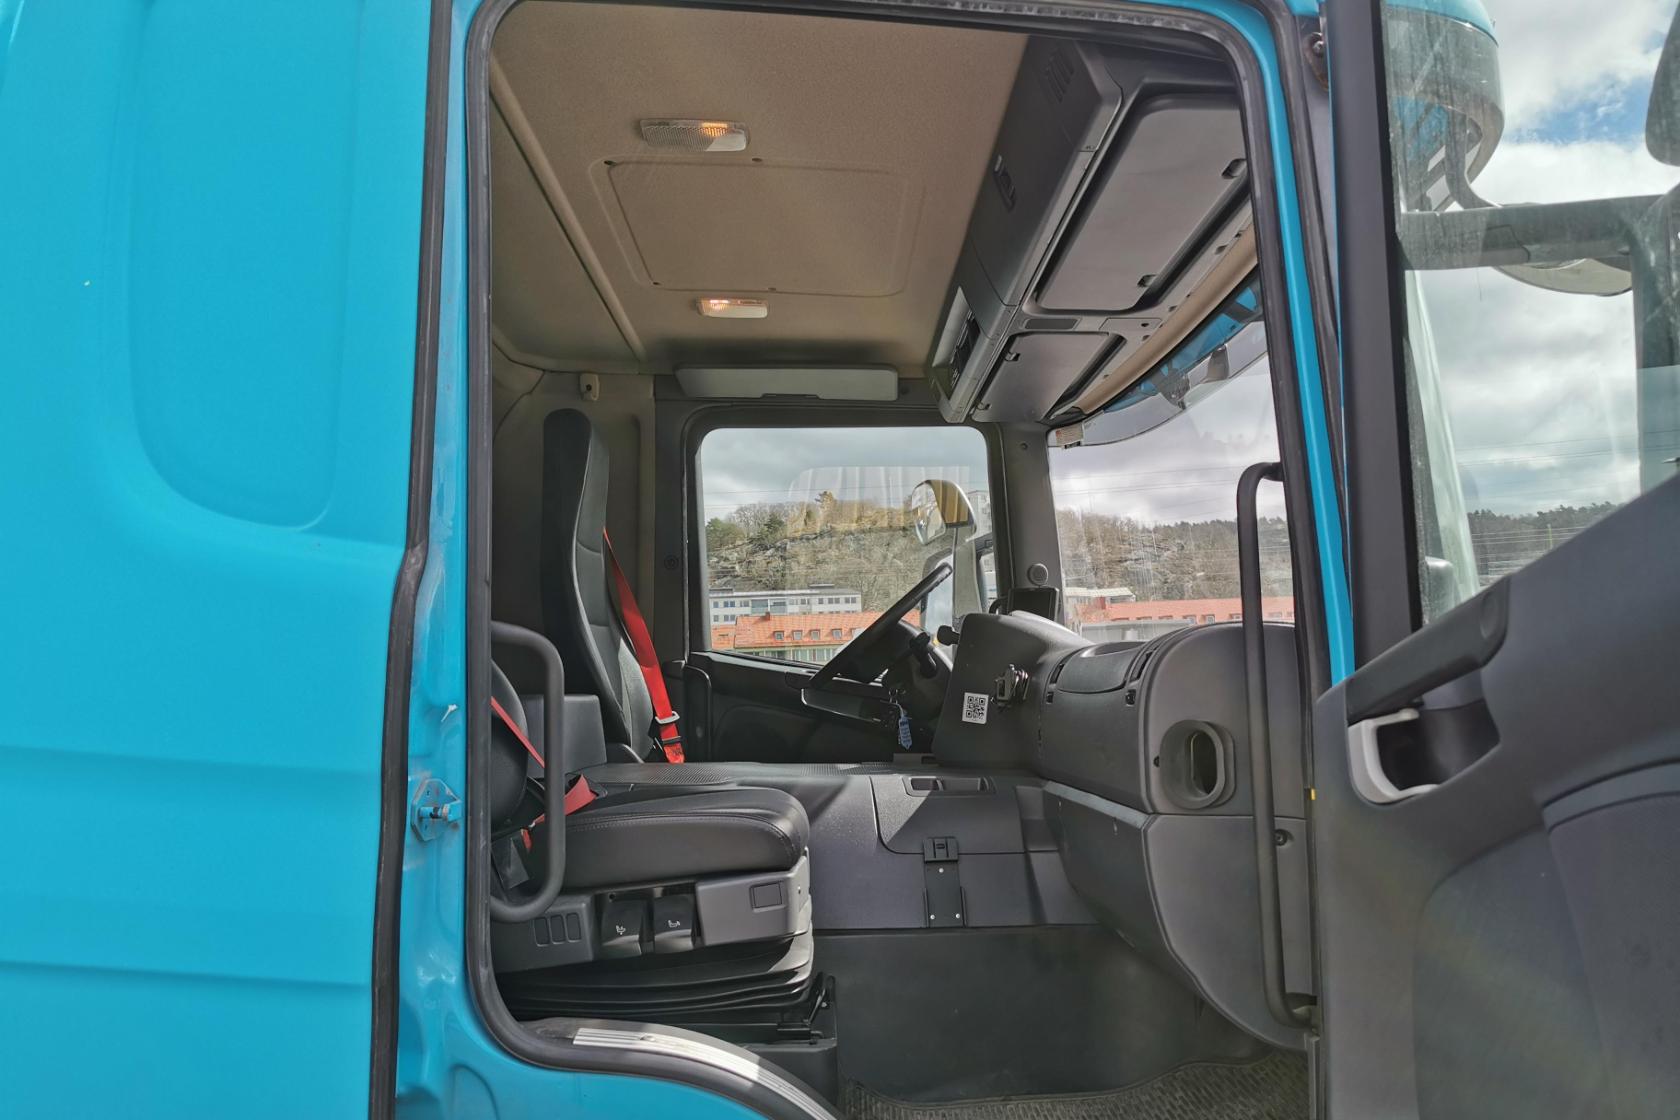 Scania P230 - 410 386 km - Automat - blå - 2013